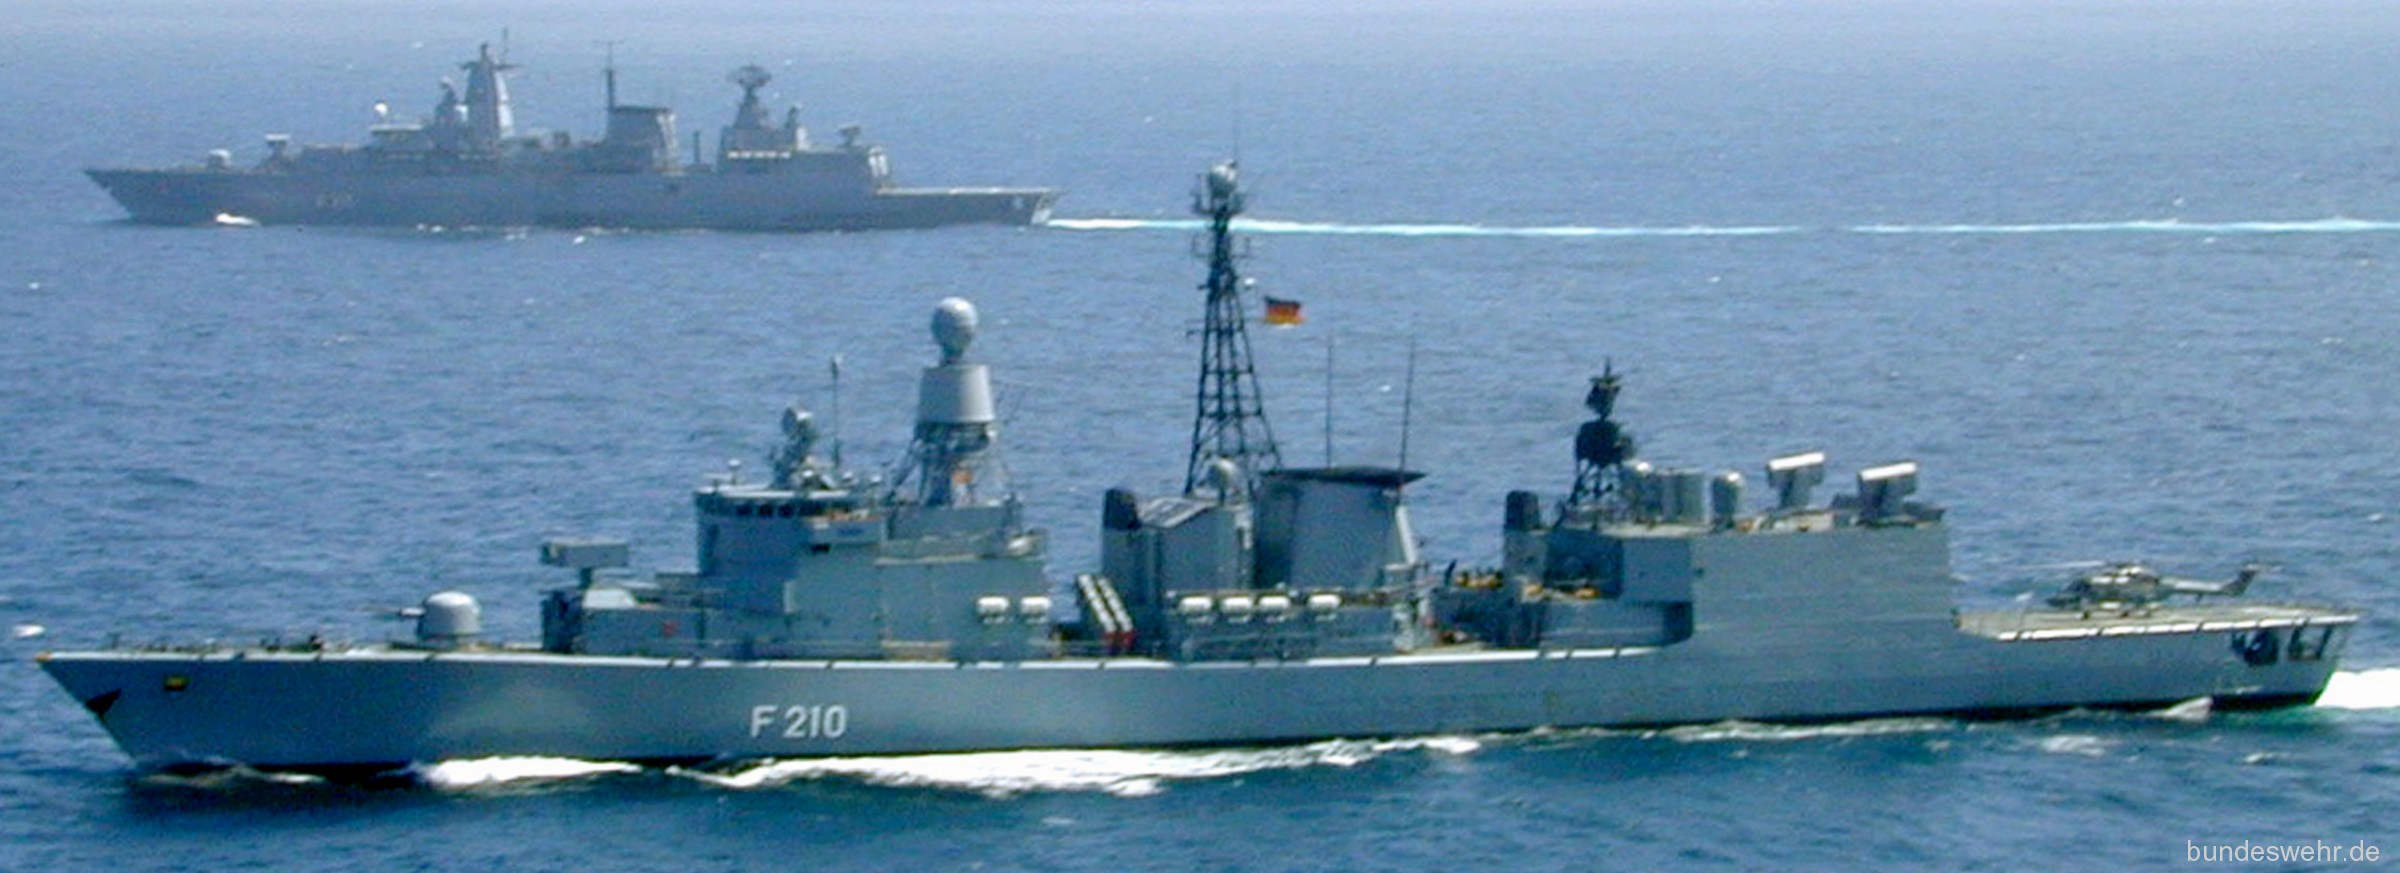 f-210 fgs emden type 122 bremen class frigate german navy 12